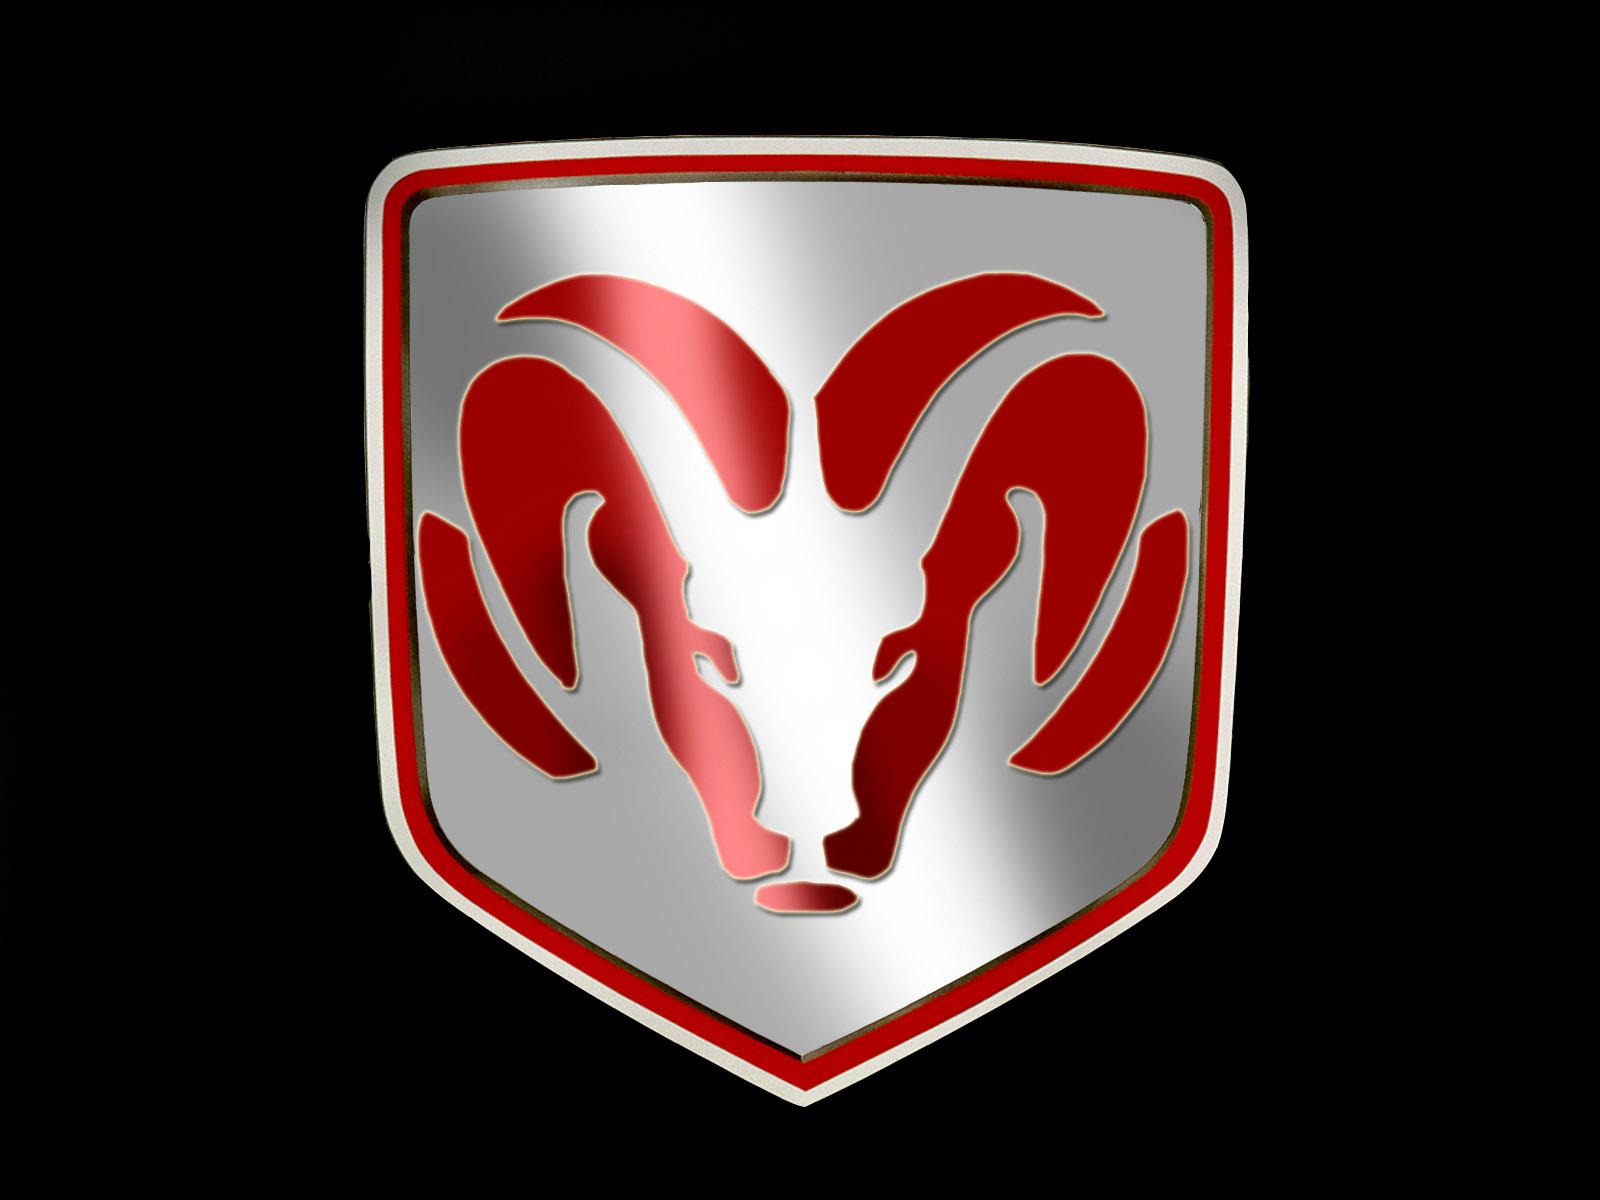 Red Dodge logo symbols